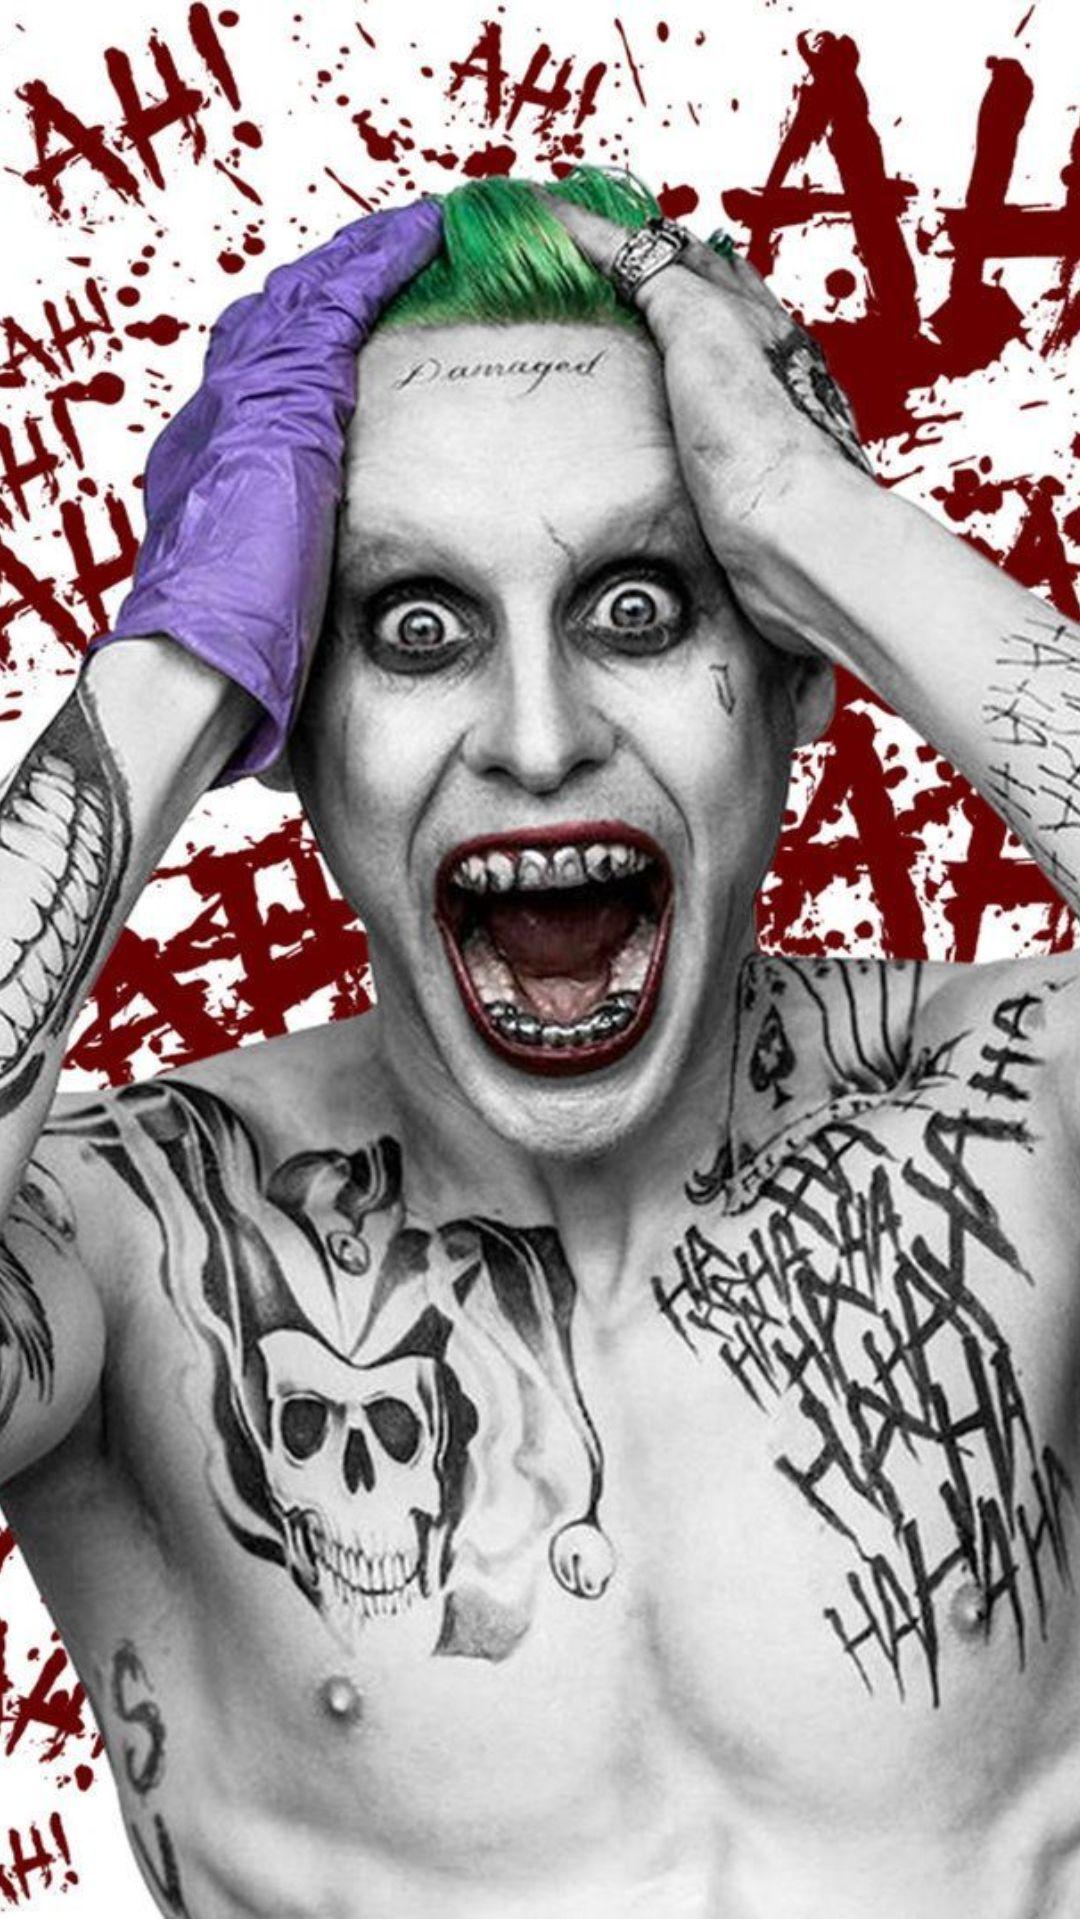 Free download Jared Leto Joker Wallpapers Top 25 Best Jared Leto Joker ...